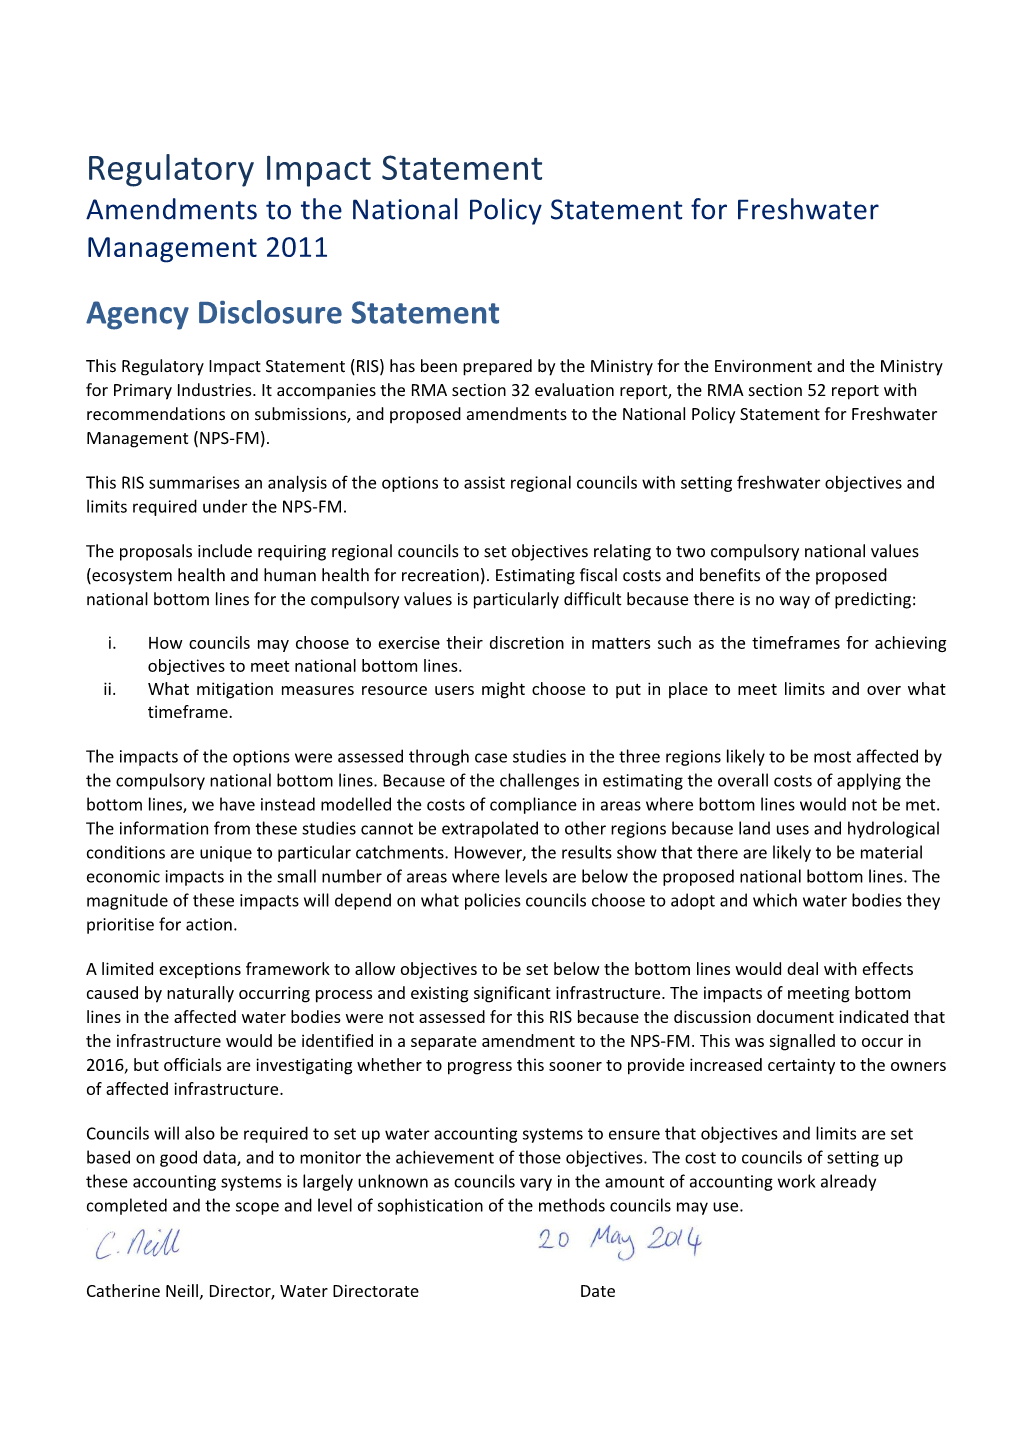 NPS-FM Amendments - Regulatory Impact Statement